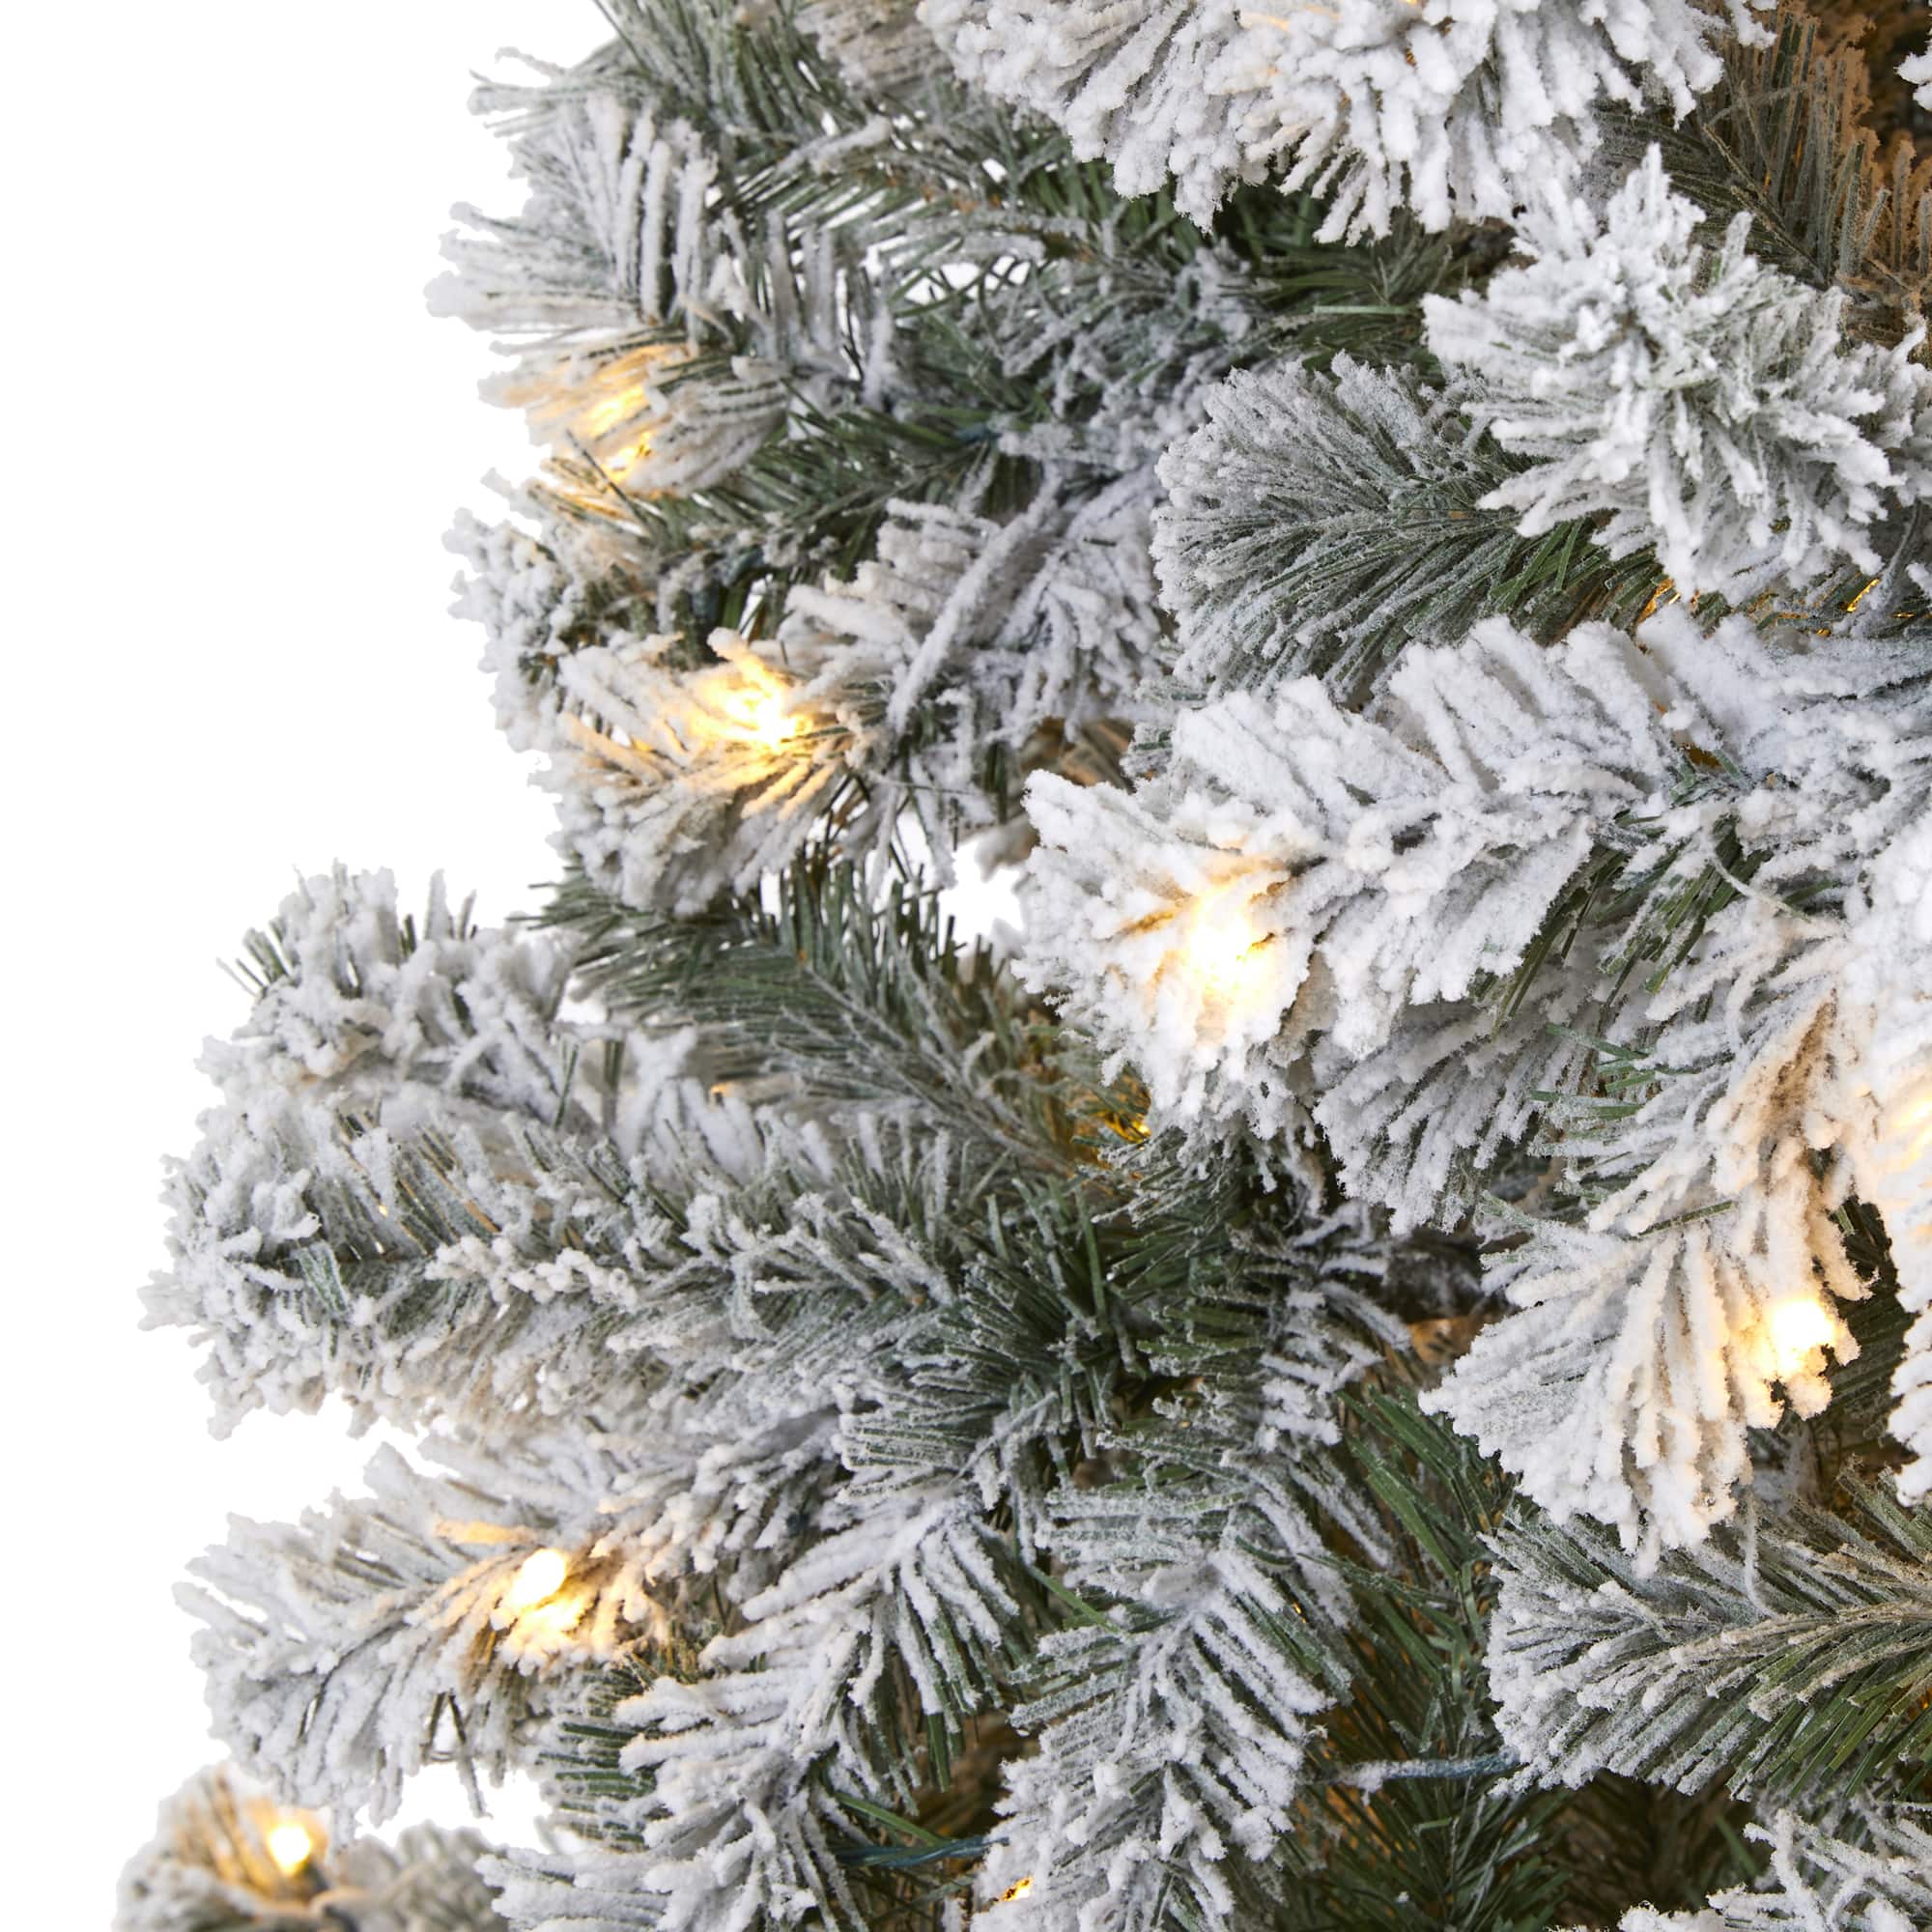 8ft. Pre-Lit Flocked West Virginia Fir Artificial Christmas Tree, Clear ...